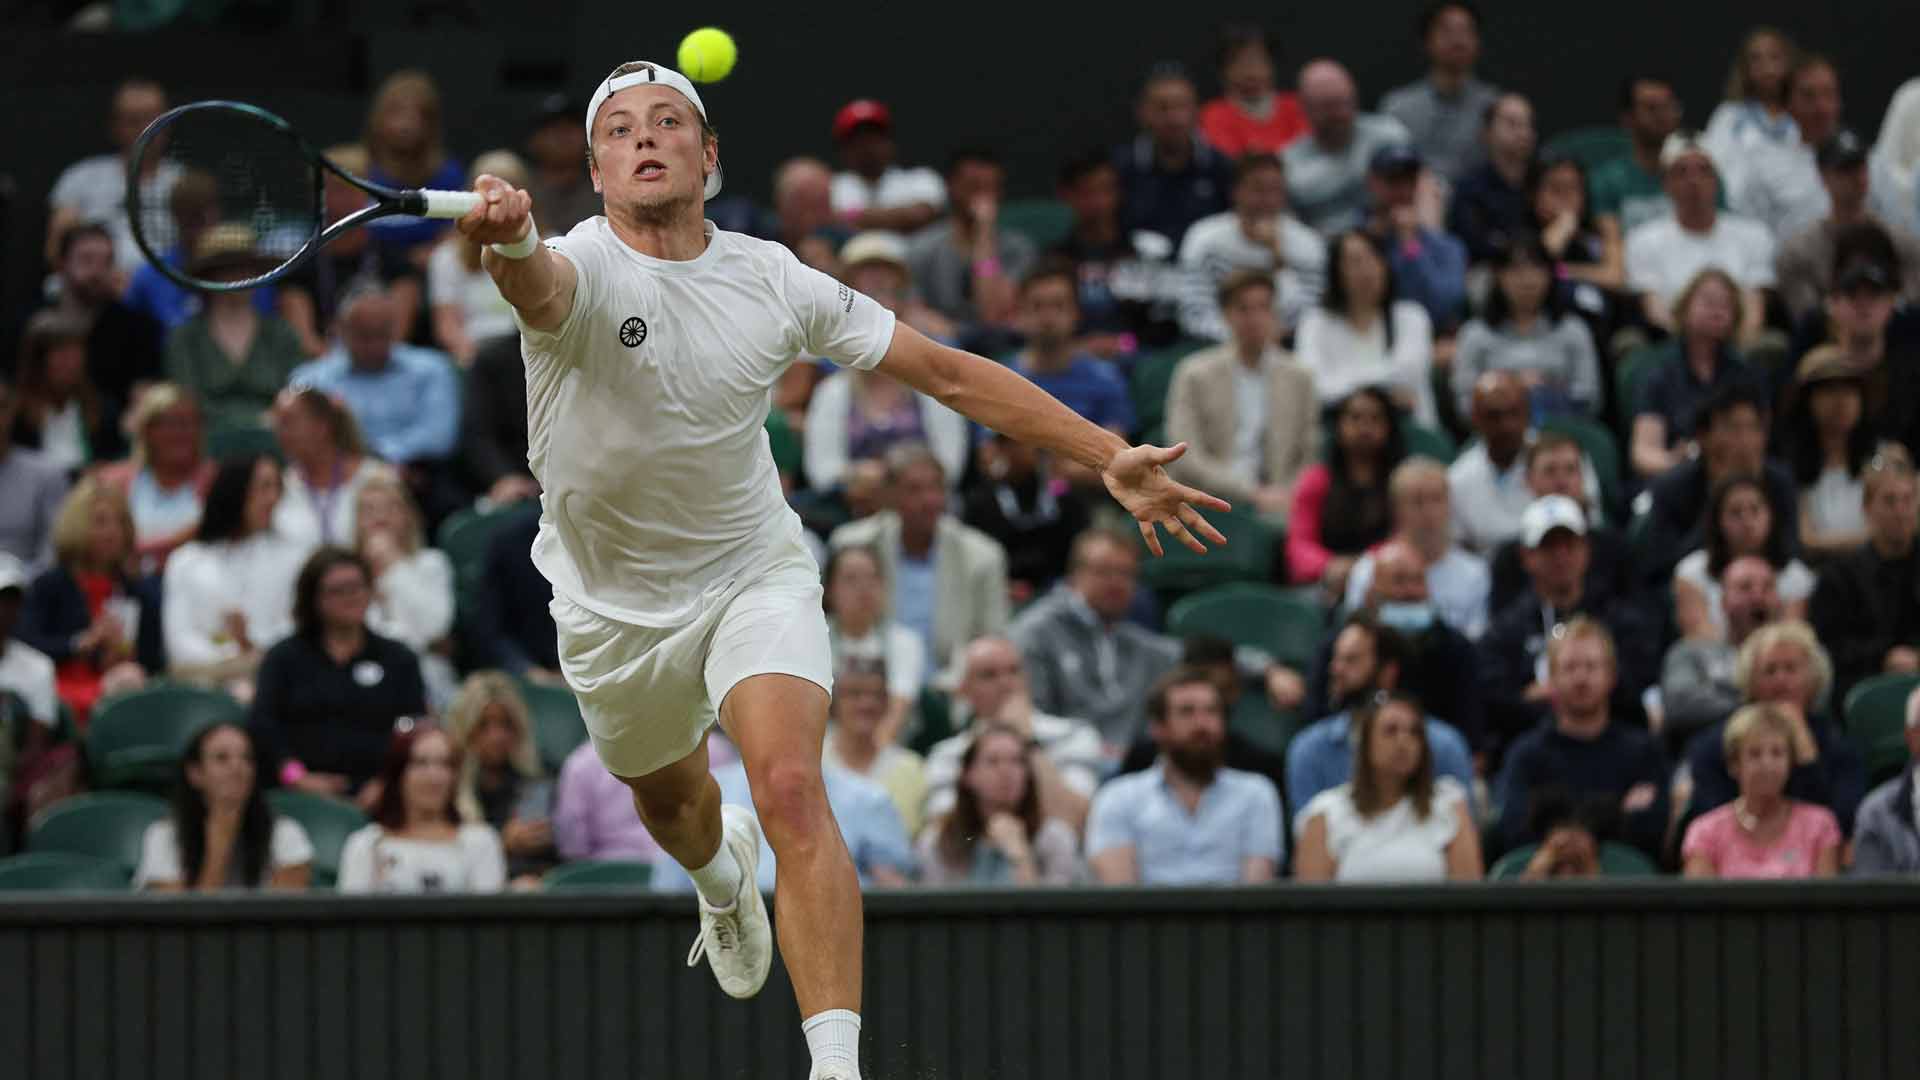 Tim Van Rijthoven en acción en Wimbledon, donde alcanzó la cuarta ronda.